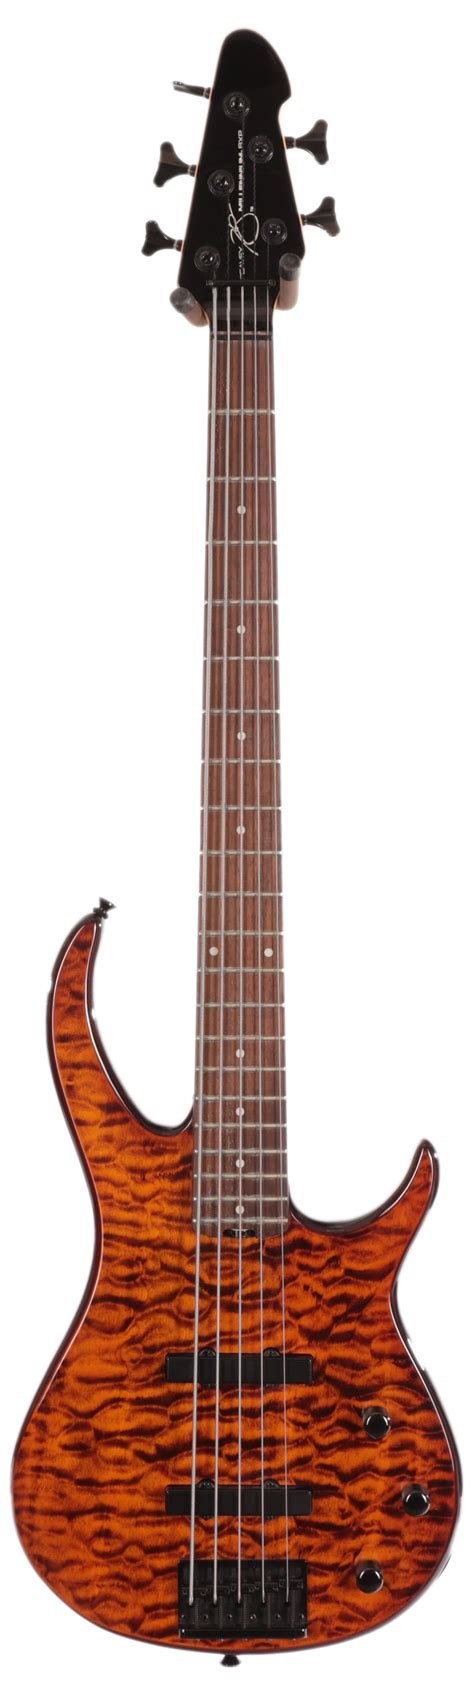 Second Hand Peavey Millenium Bxp 5 String Bass In Tigers Eye Burst